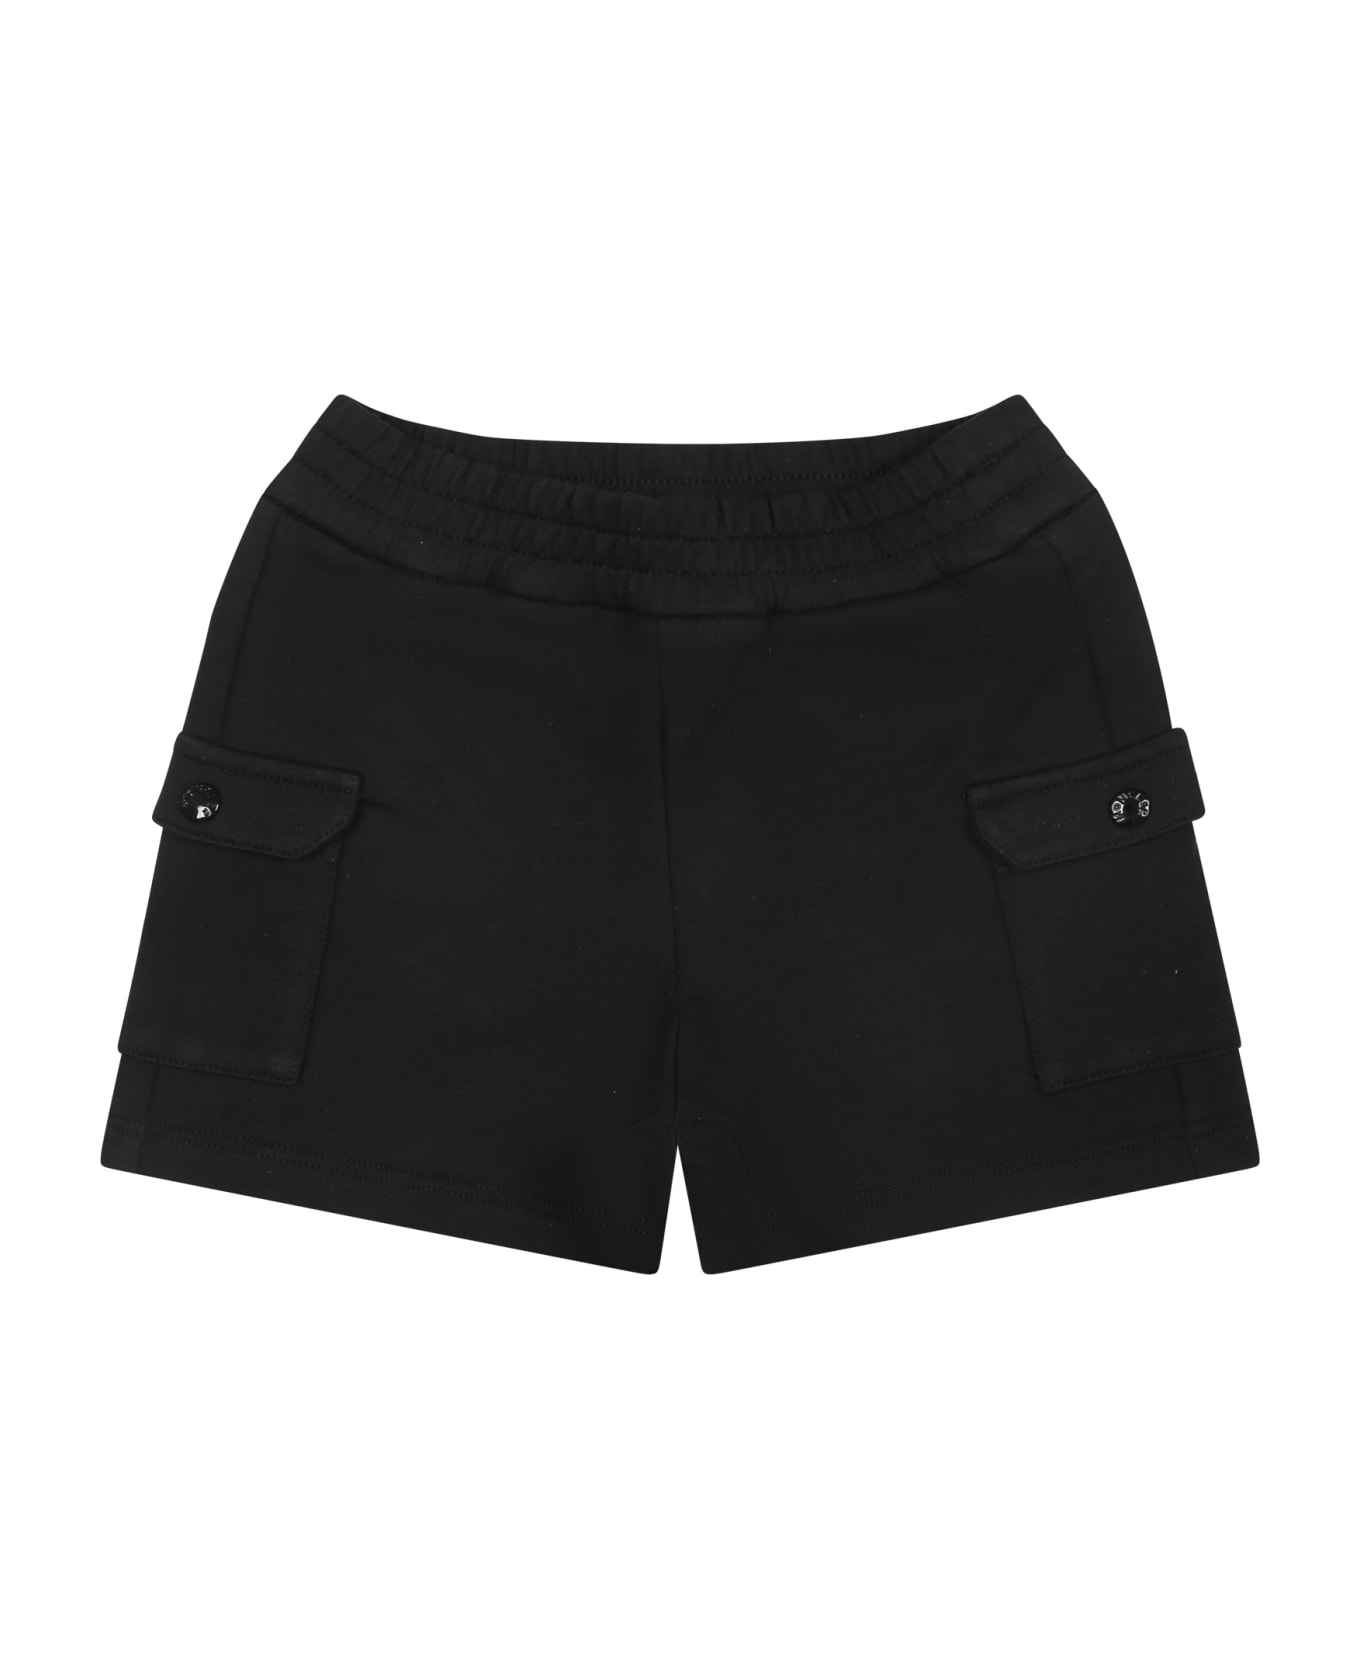 Moncler Black Sports Shorts For Baby Boy - Black ボトムス